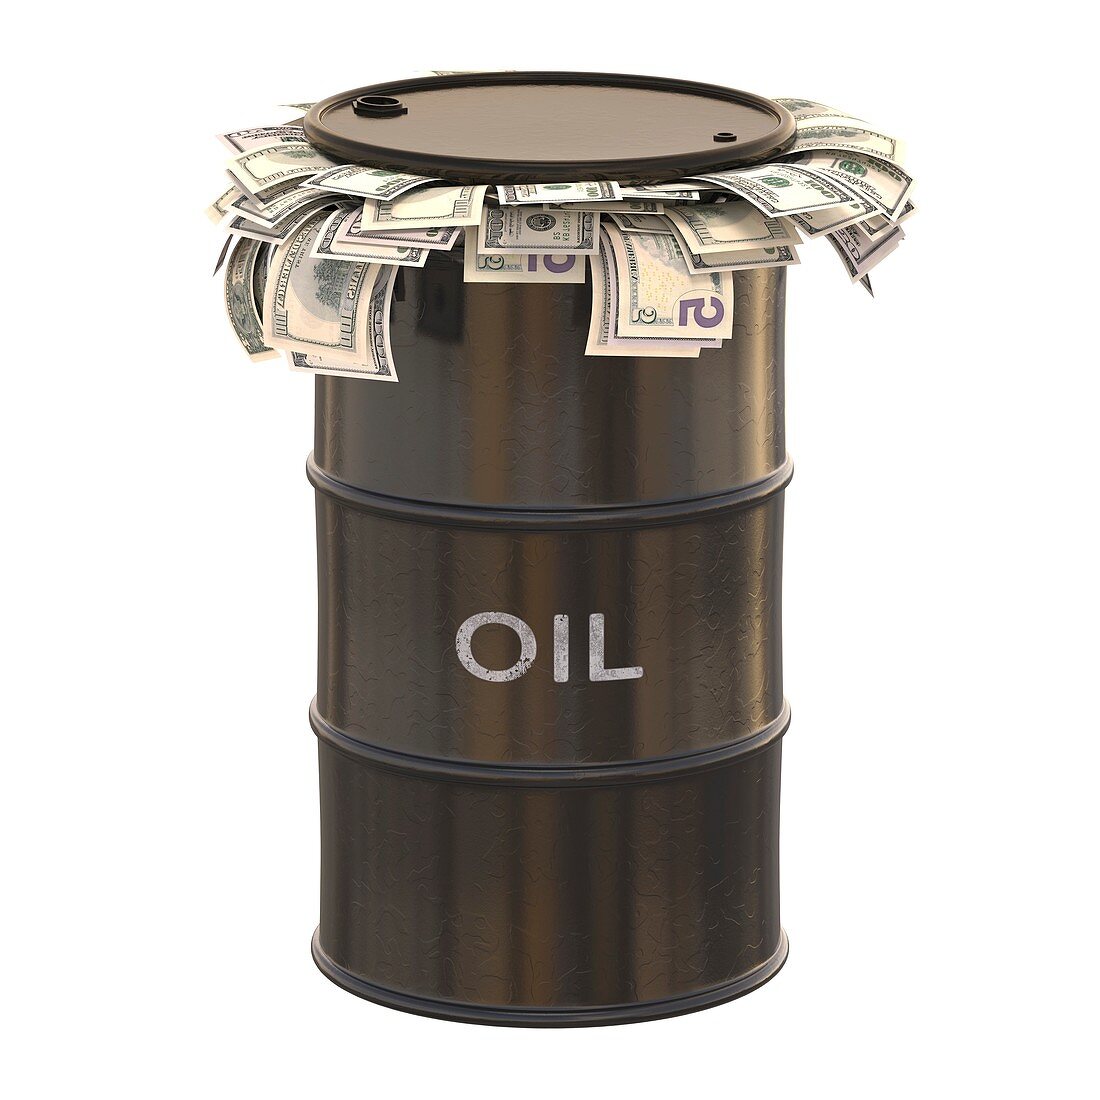 Oil barrel with US dollars,illustration